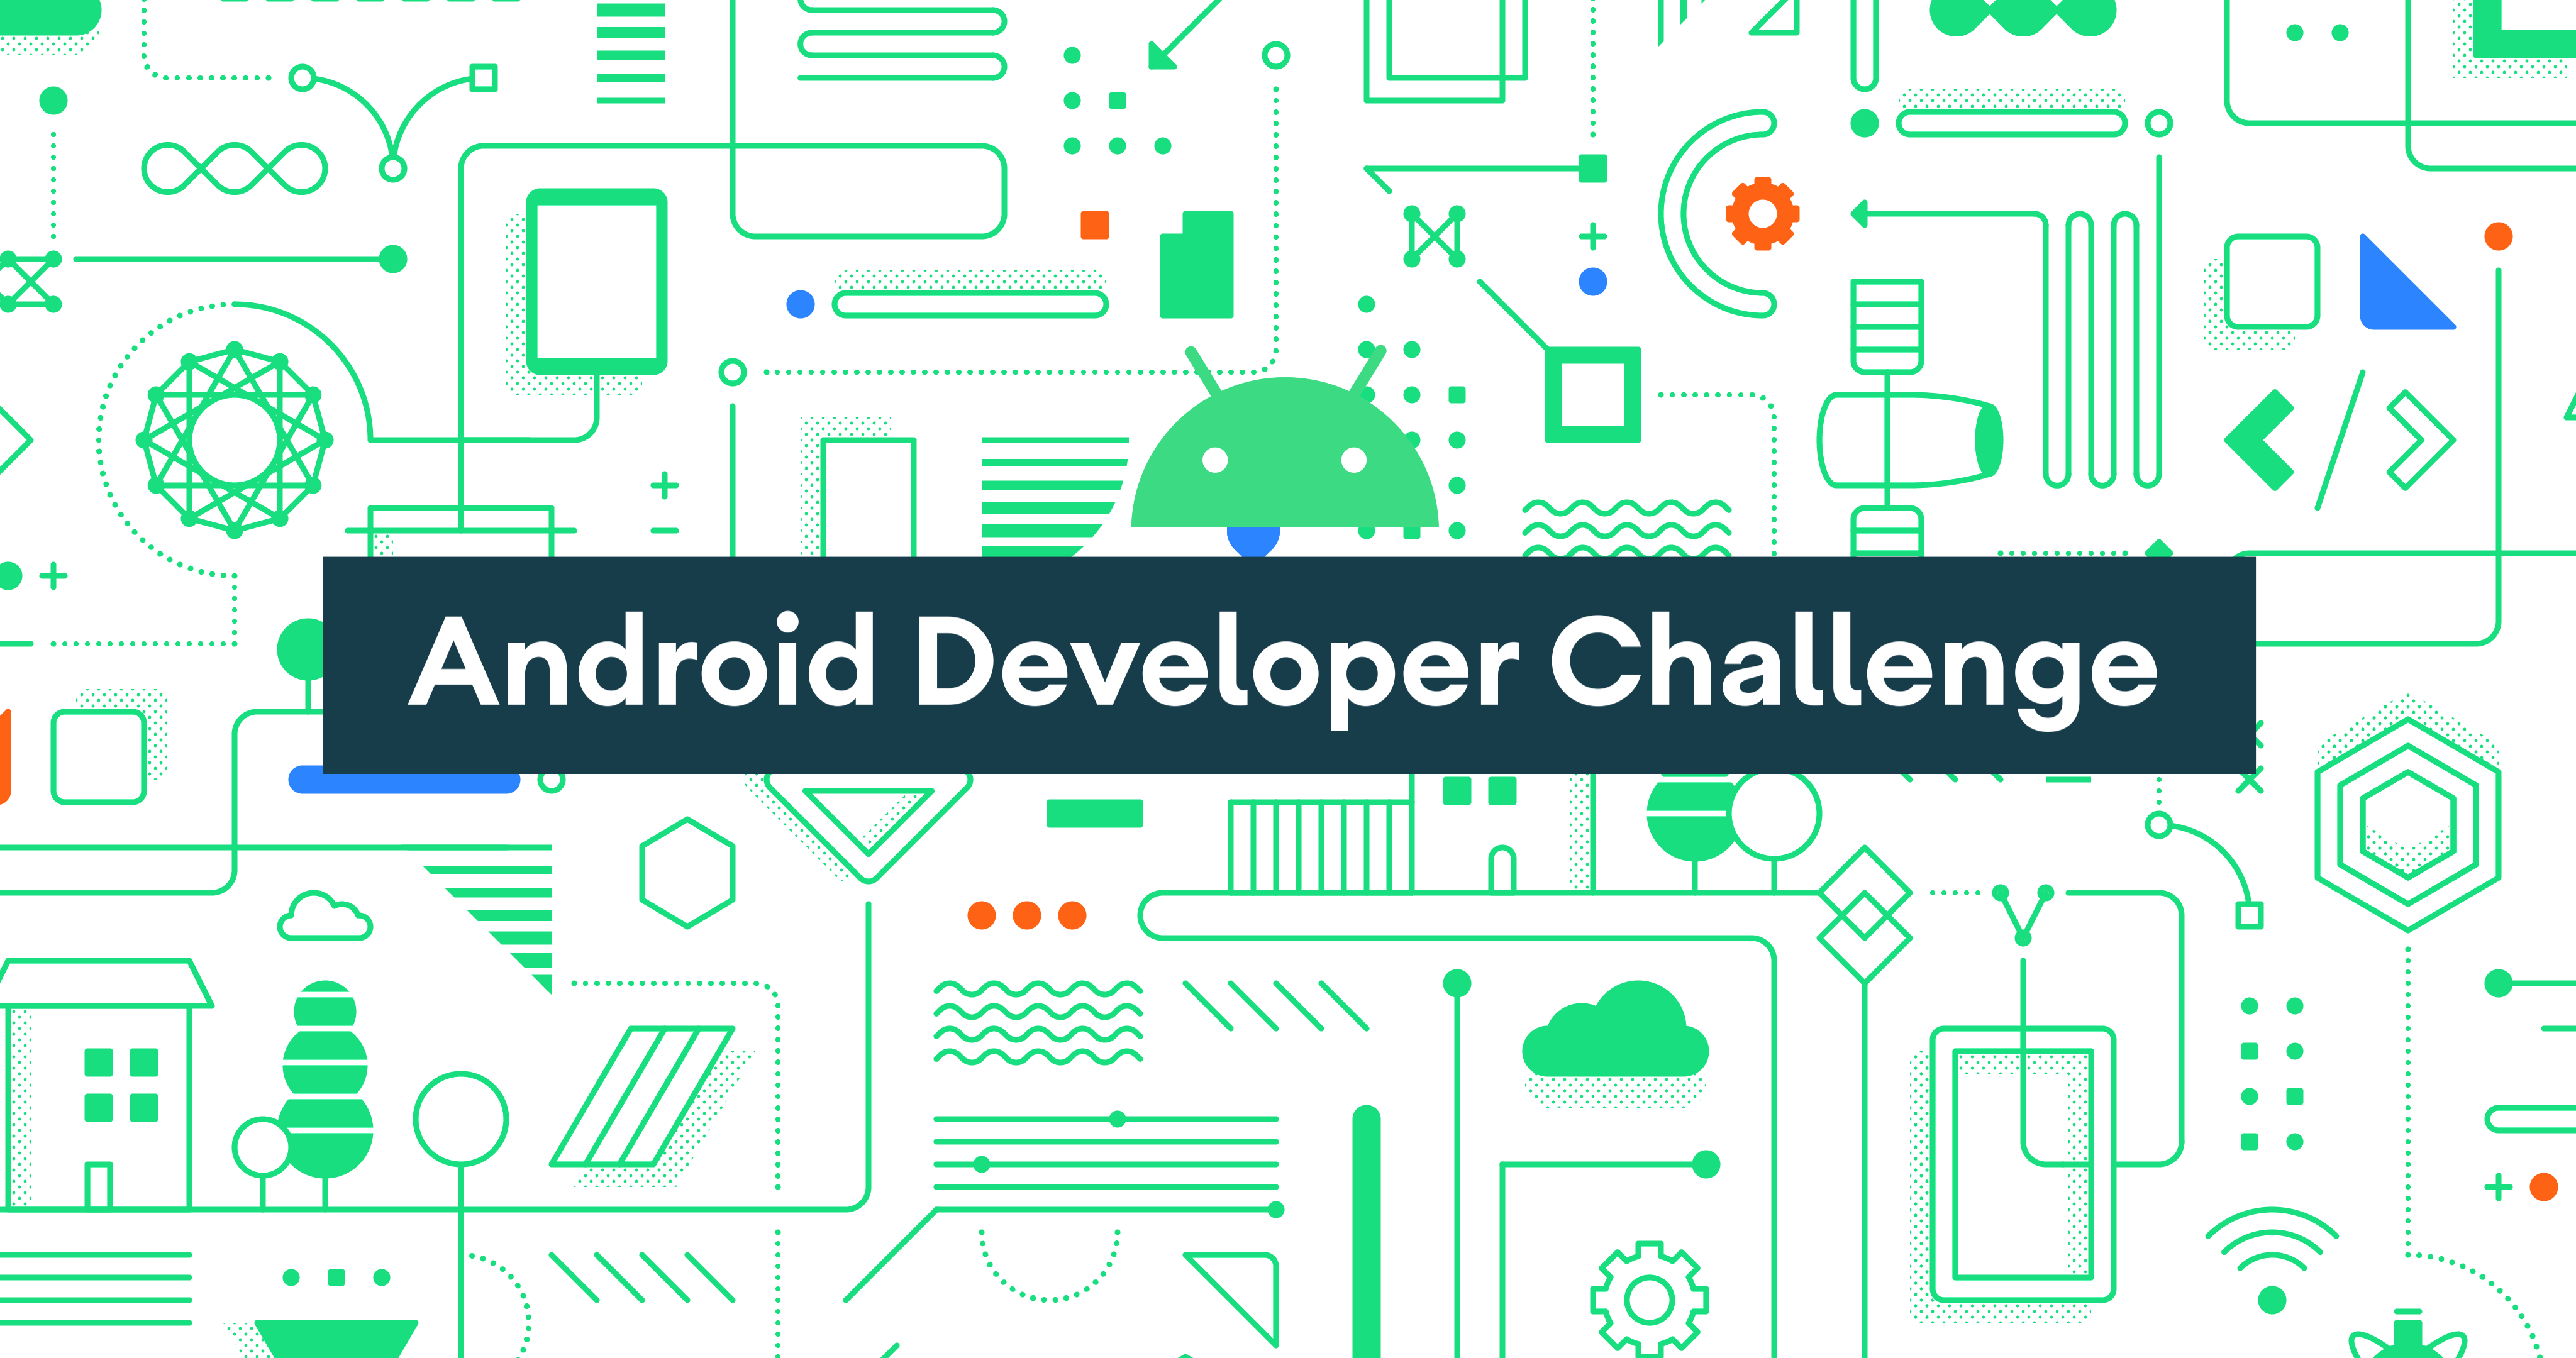 Droid verde para desenvolvedores Android